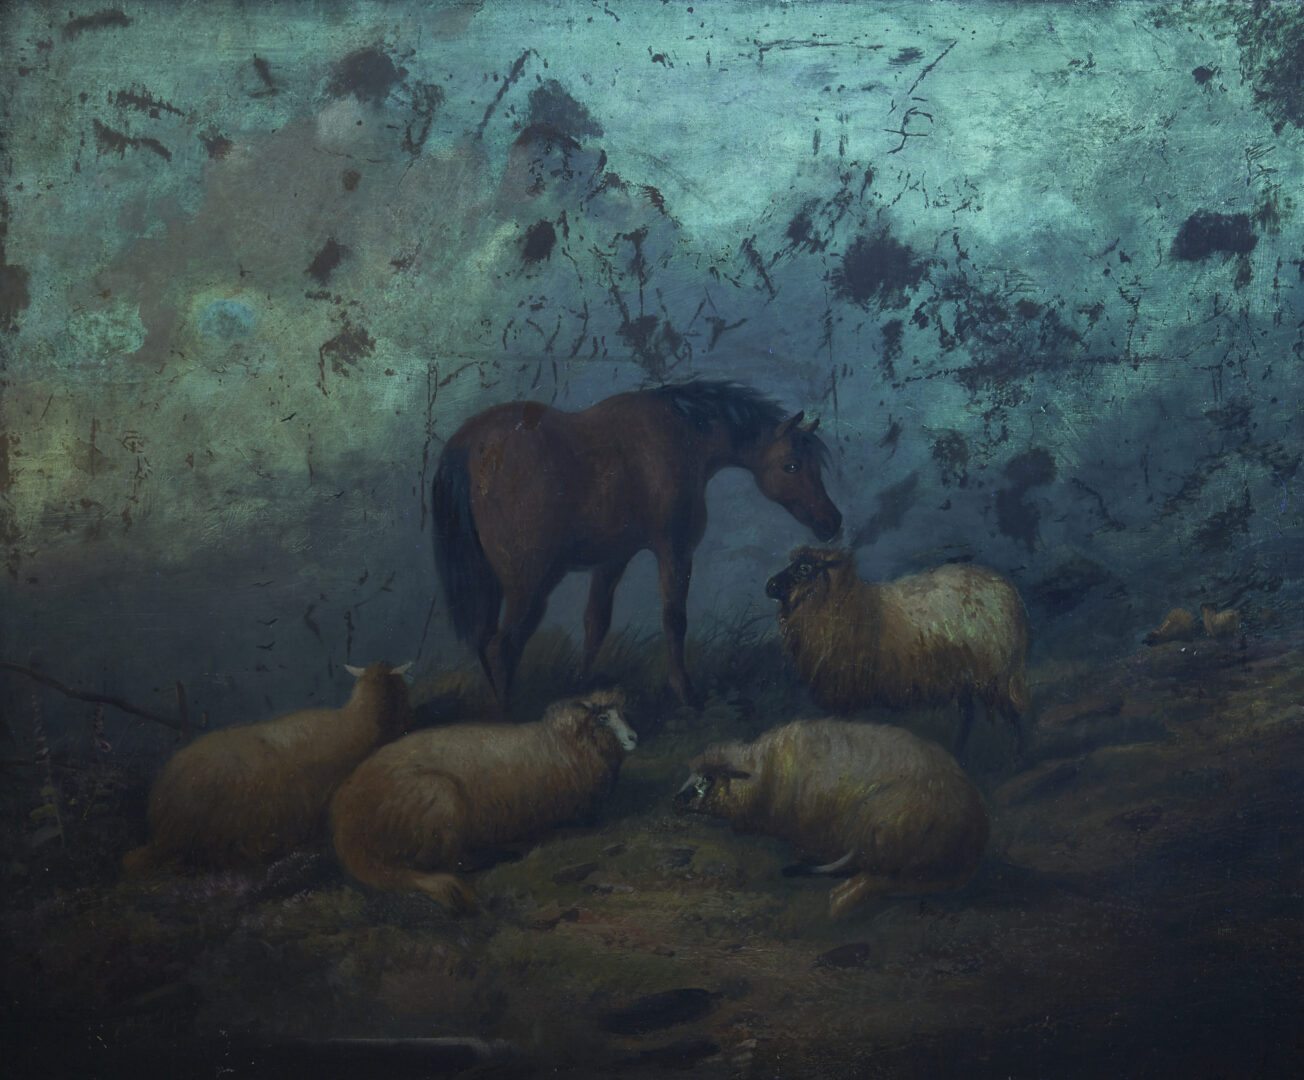 Lot 642: British School O/C Pastoral Painting of Sheep & Horse, 19th C.